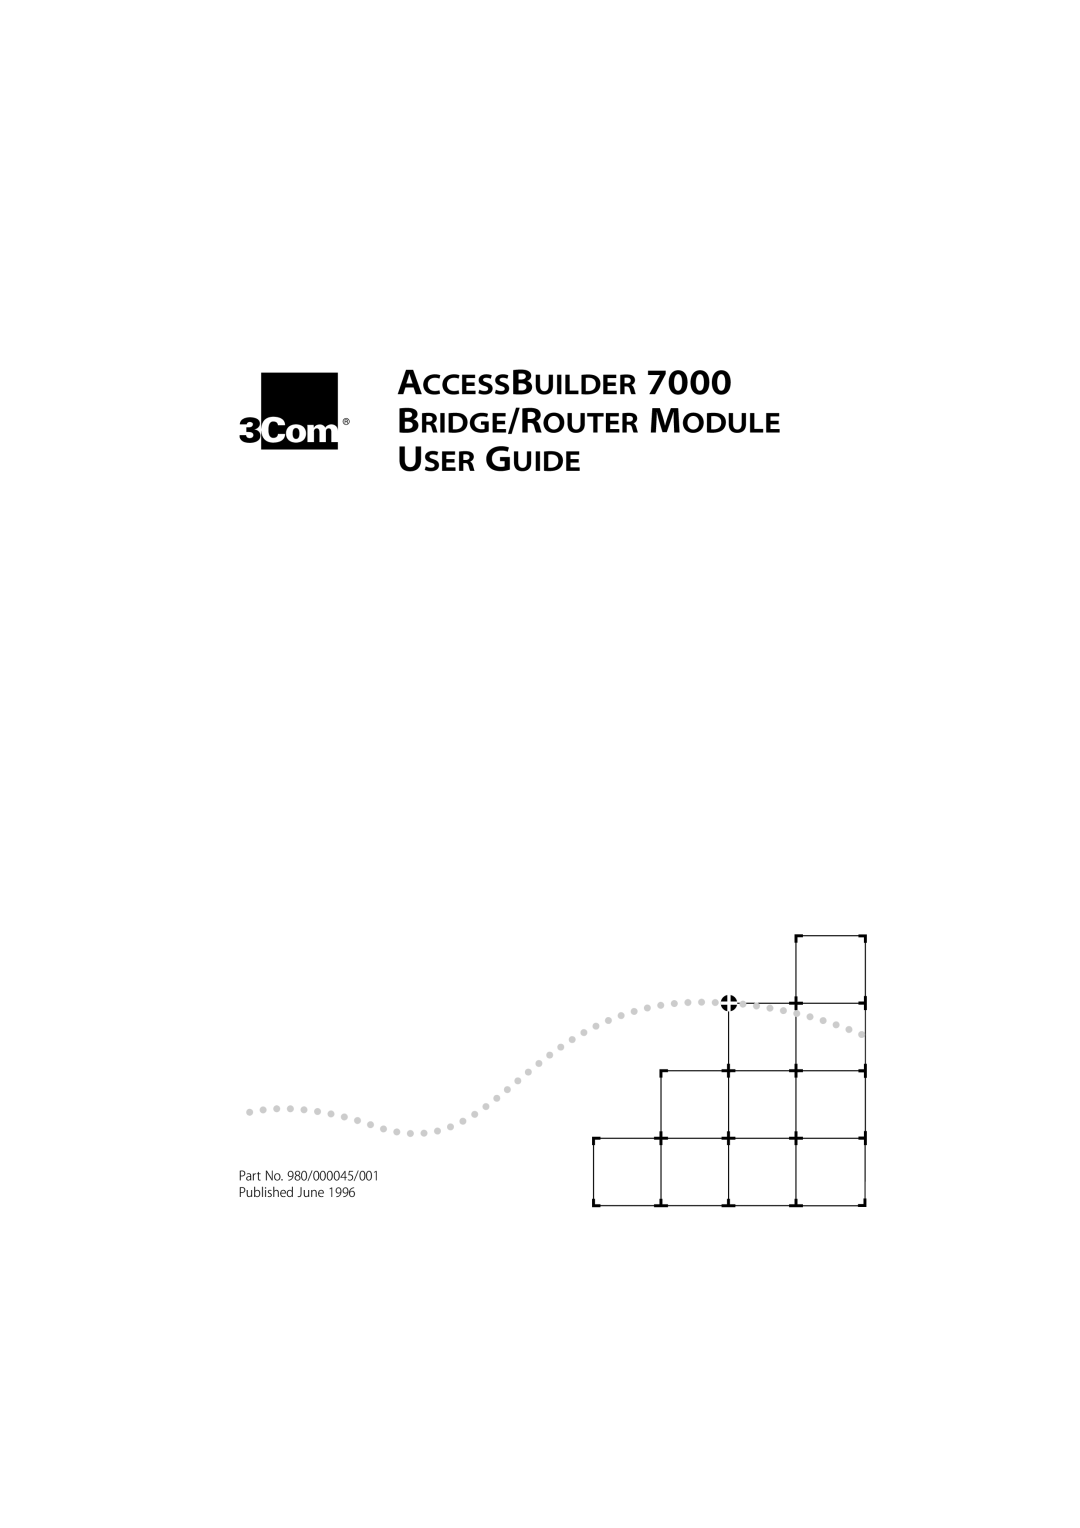 3Com 7000 manual Accessbuilder BRIDGE/ROUTER Module User Guide 